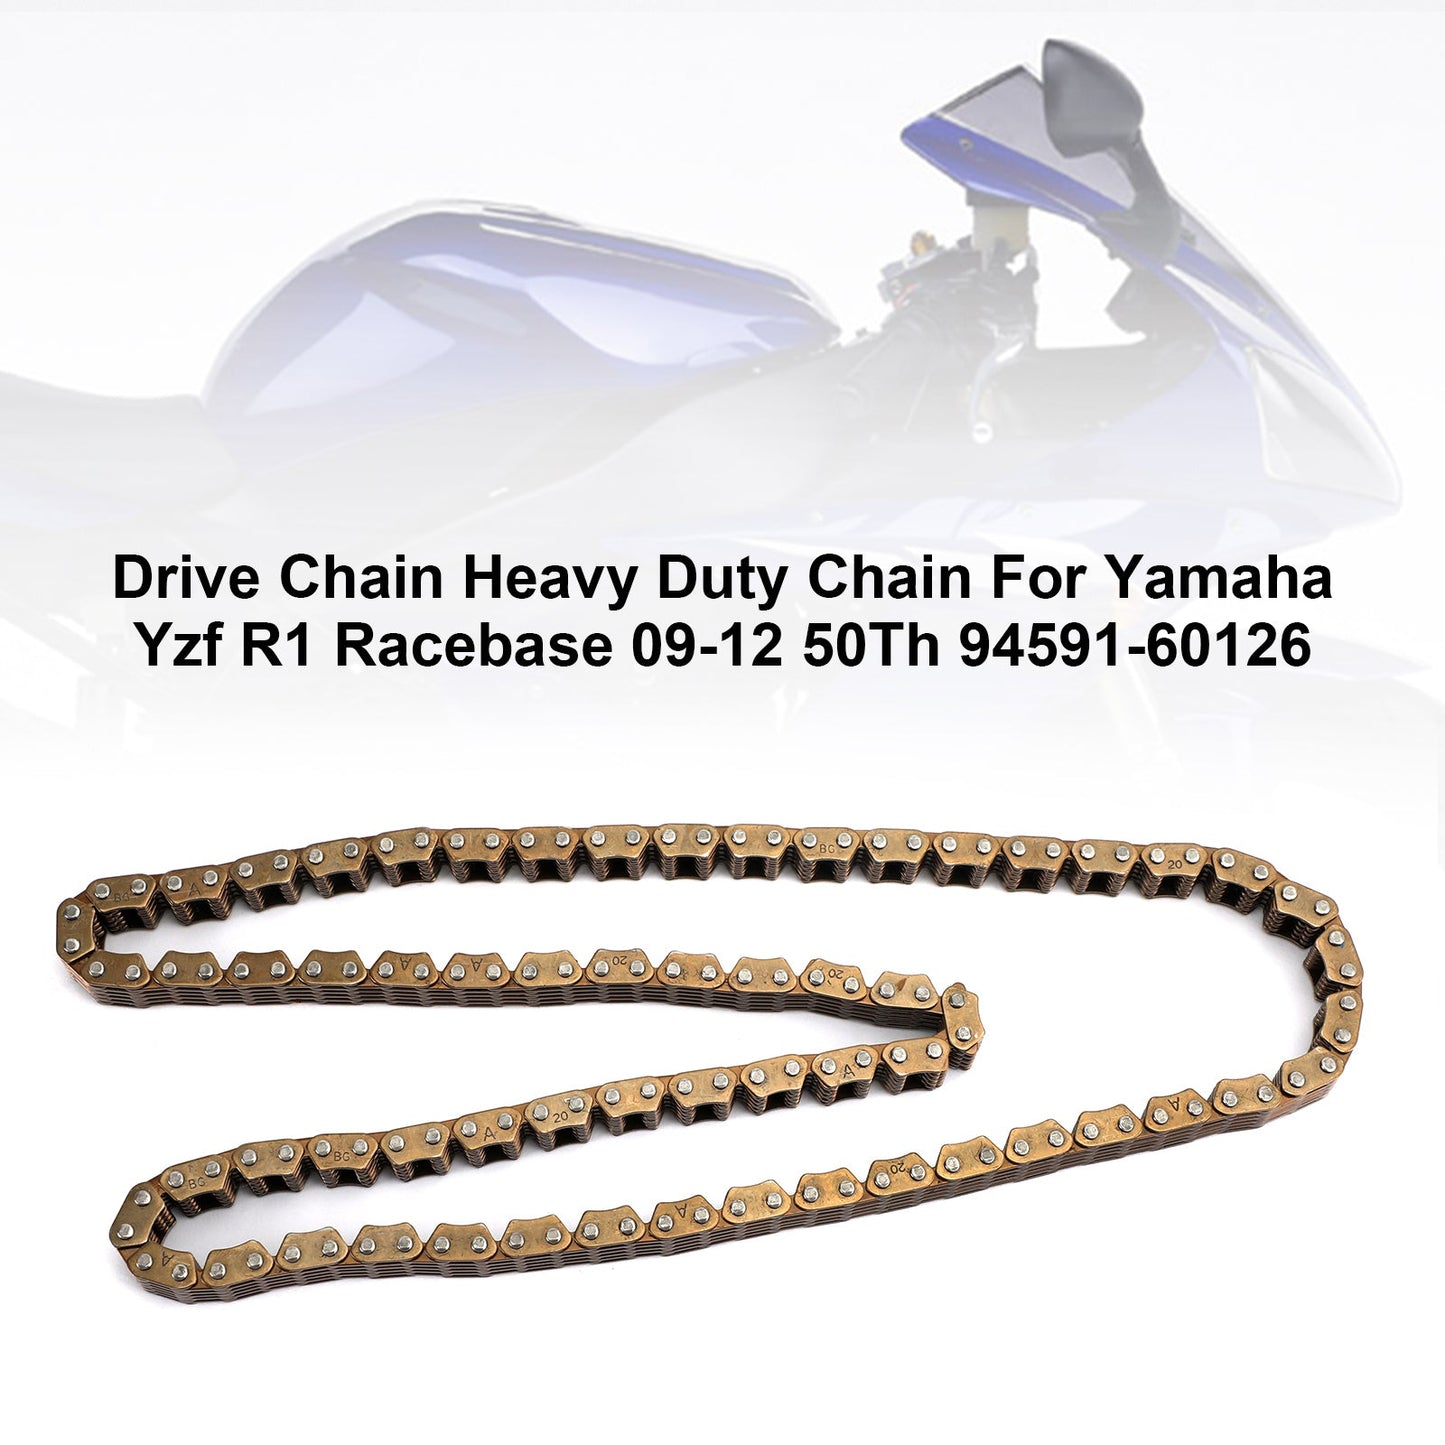 New Heavy Duty Drive Chain For Yamaha Yzf R1 Racebase 09-12 50Th 94591-60126